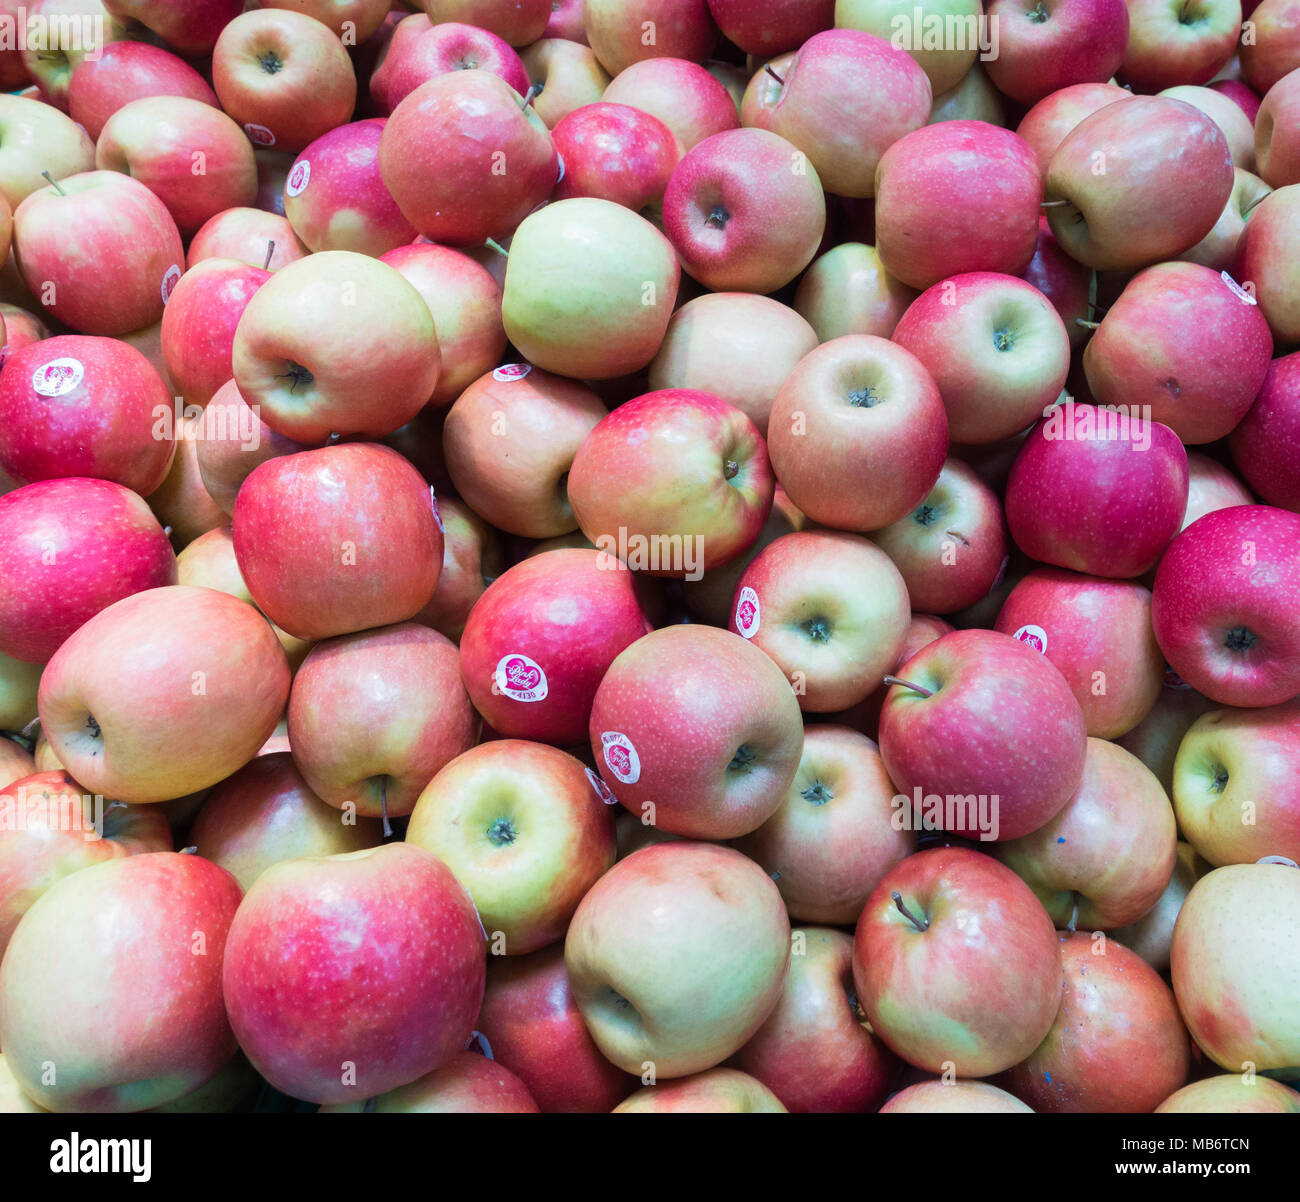 https://c8.alamy.com/comp/MB6TCN/pink-lady-apples-on-market-stall-MB6TCN.jpg